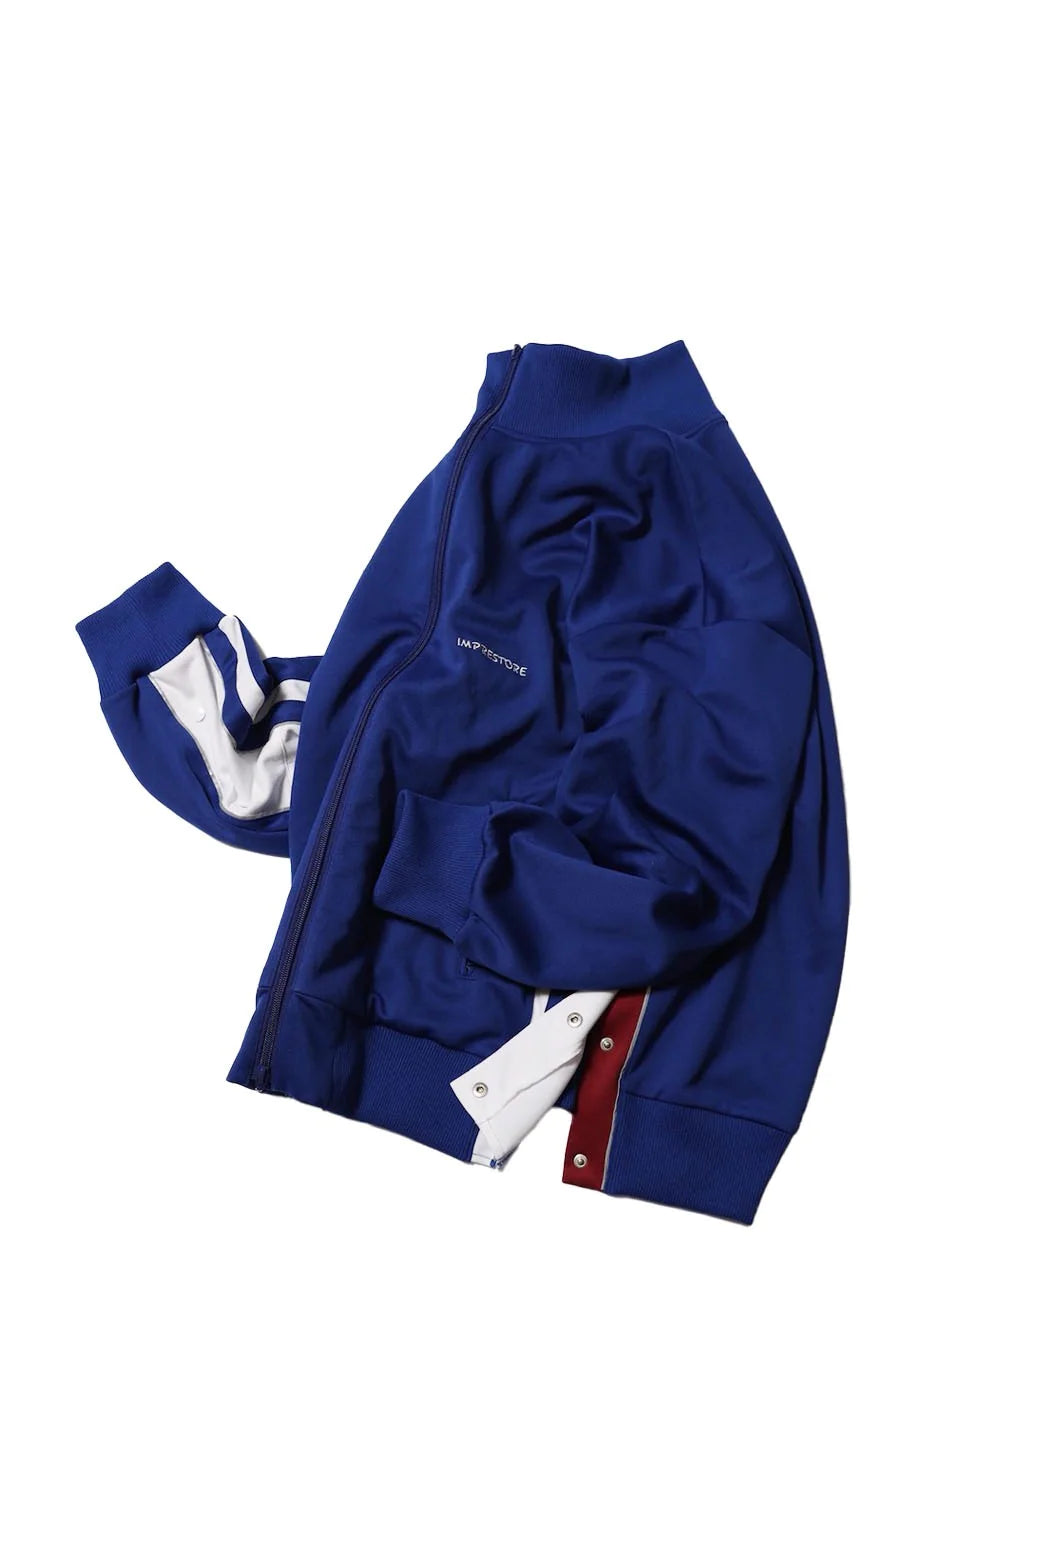 No:O'Neill | Name:Basket Jersey Top | Color:Blue/maroon【IMPRESTORE_インプレストア】【NASNGWAM_ナスングワム】